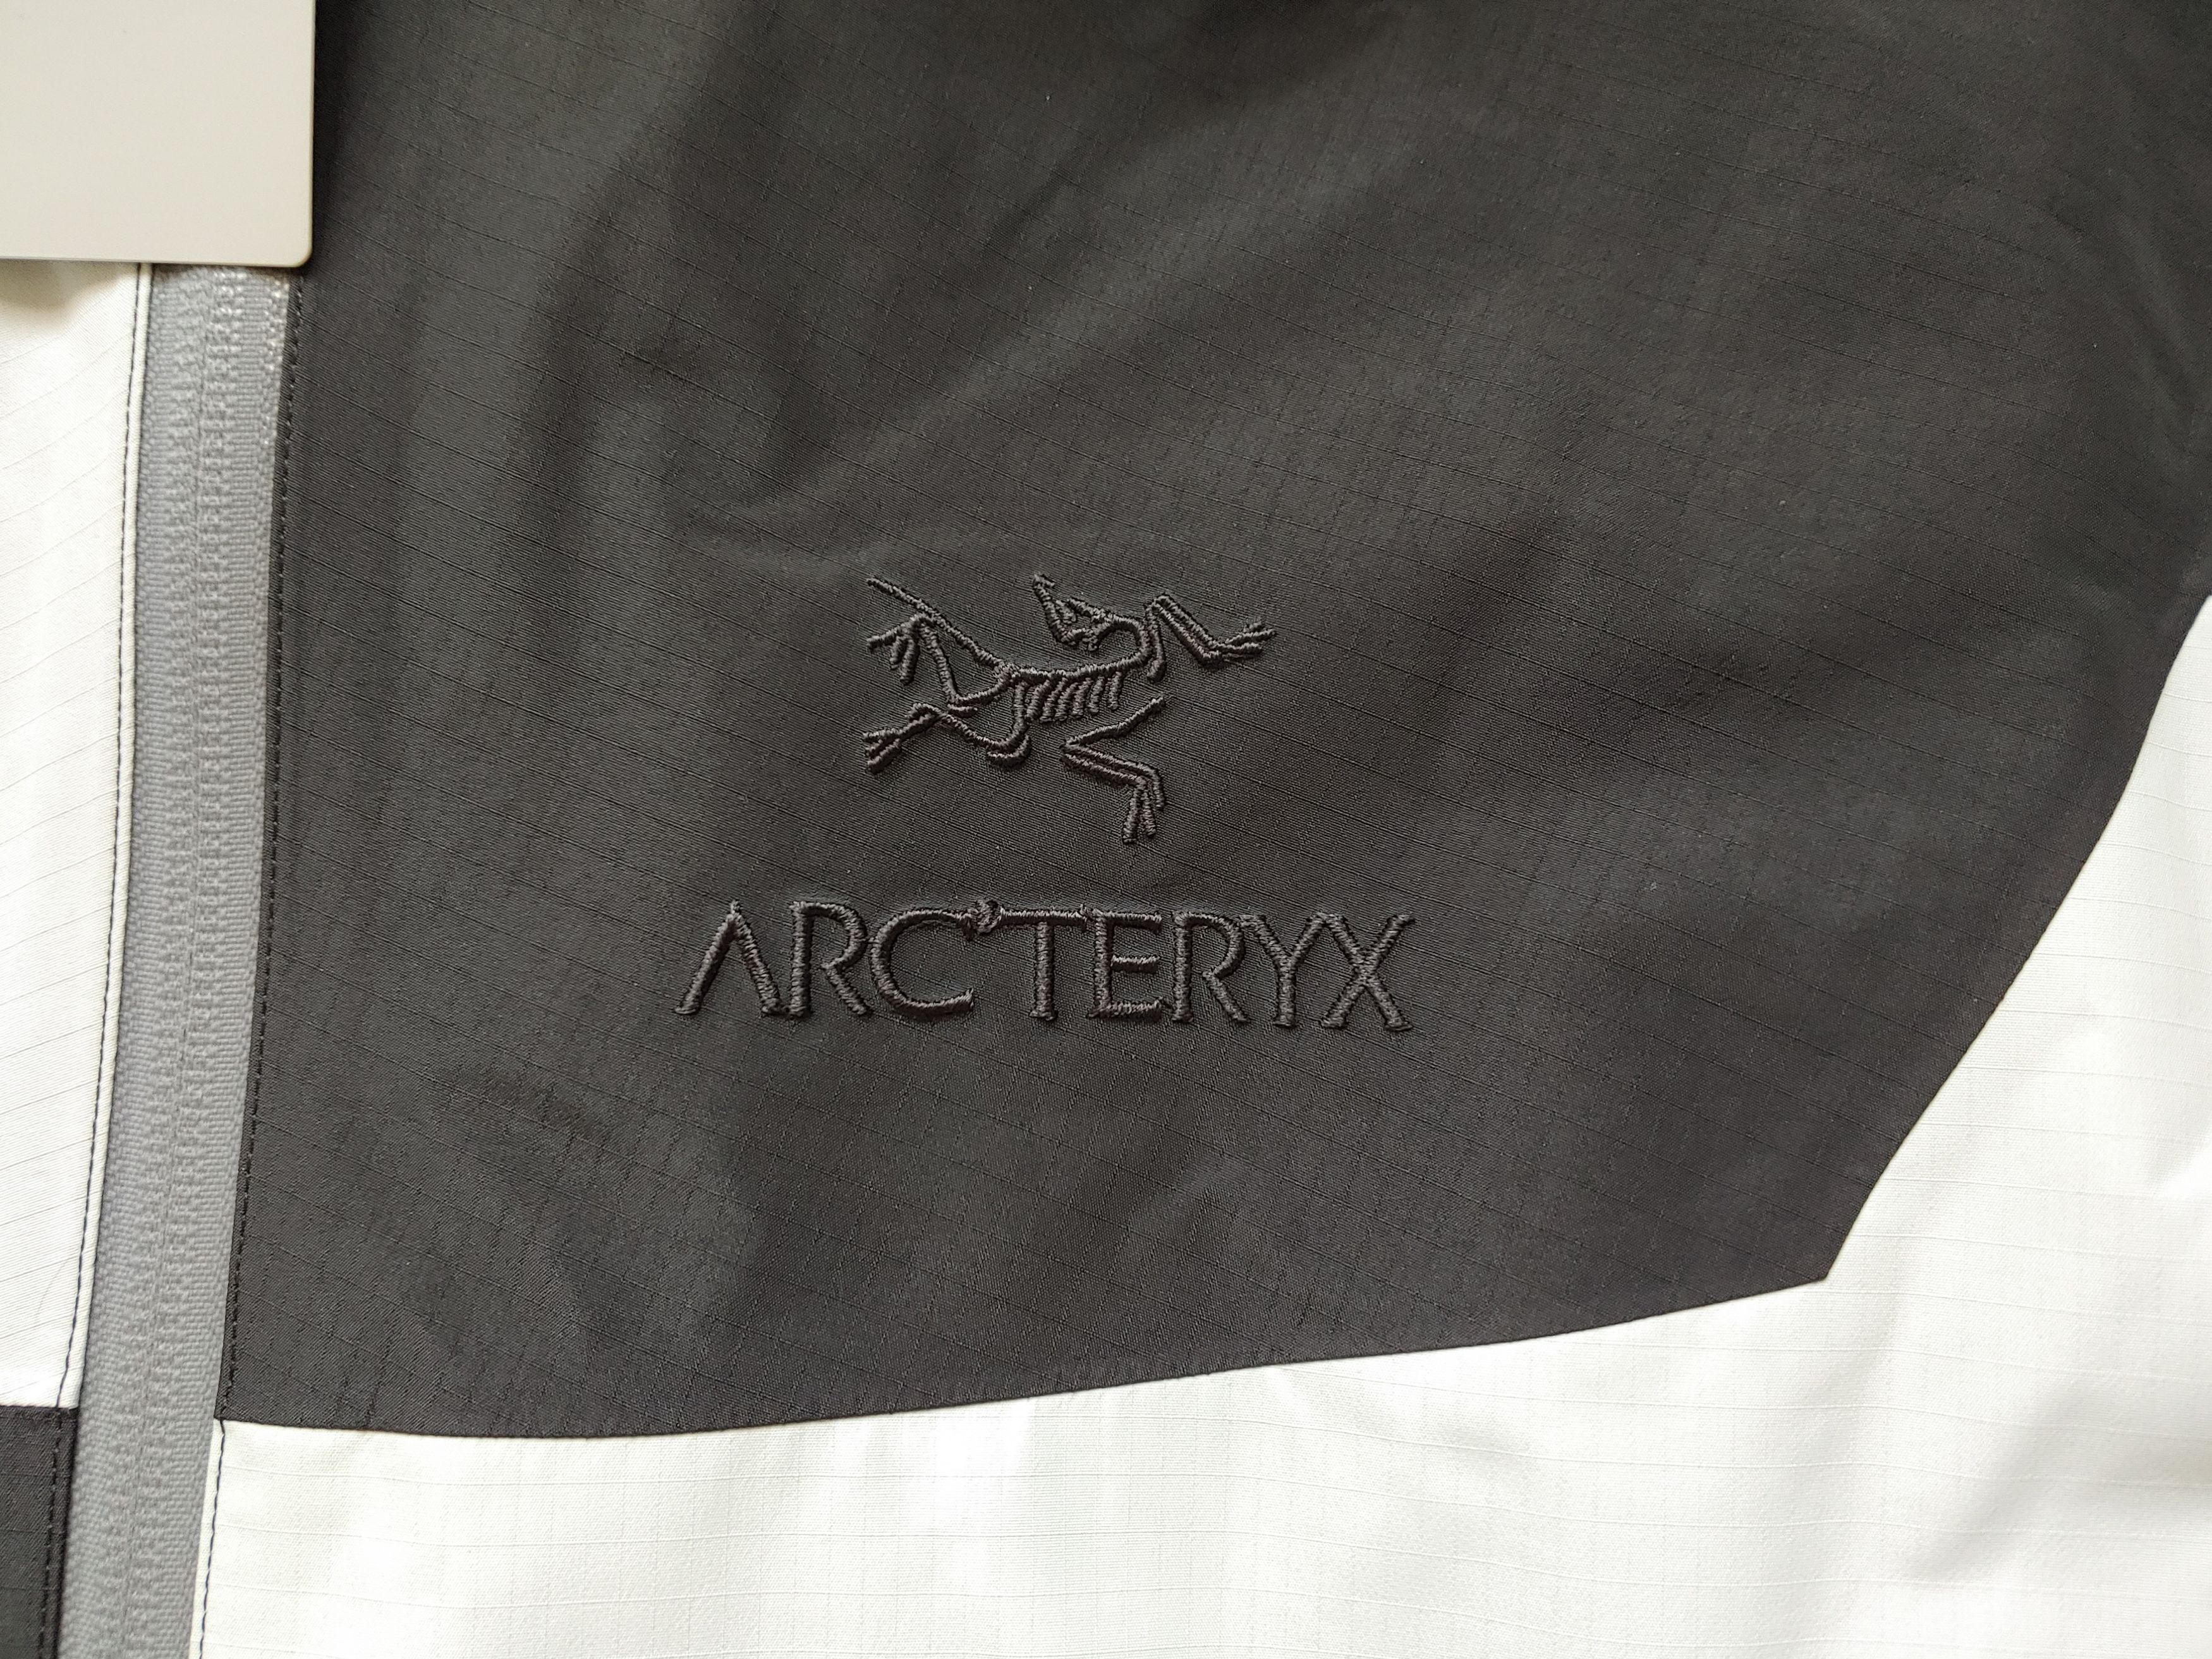 Arc'Teryx [New Rare] Arc'teryx Beams Beta Sl Jacket 18AW Monochrome Size US M / EU 48-50 / 2 - 6 Thumbnail